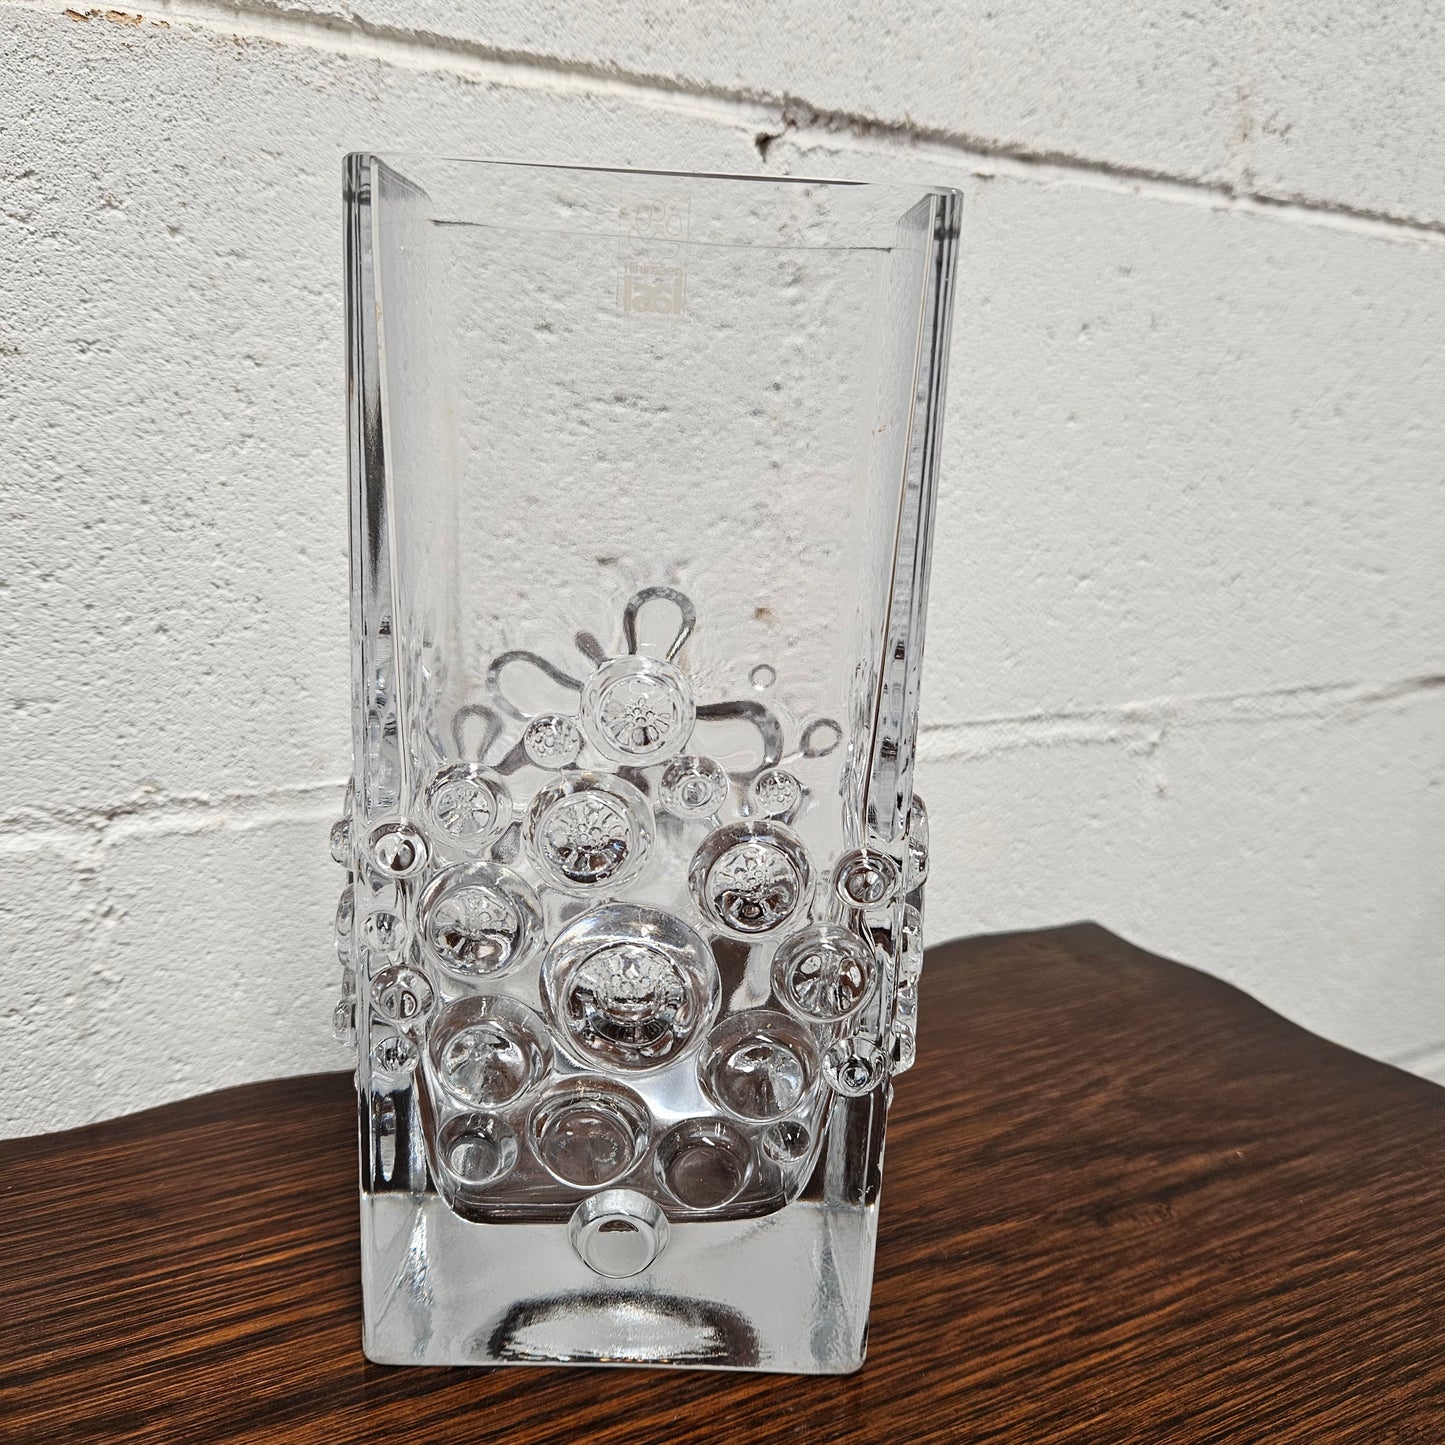 Riihimaen " Lasi Stella Polaris" glass vase made in Finland with its original sticker. In good original condition with no chips or cracks.